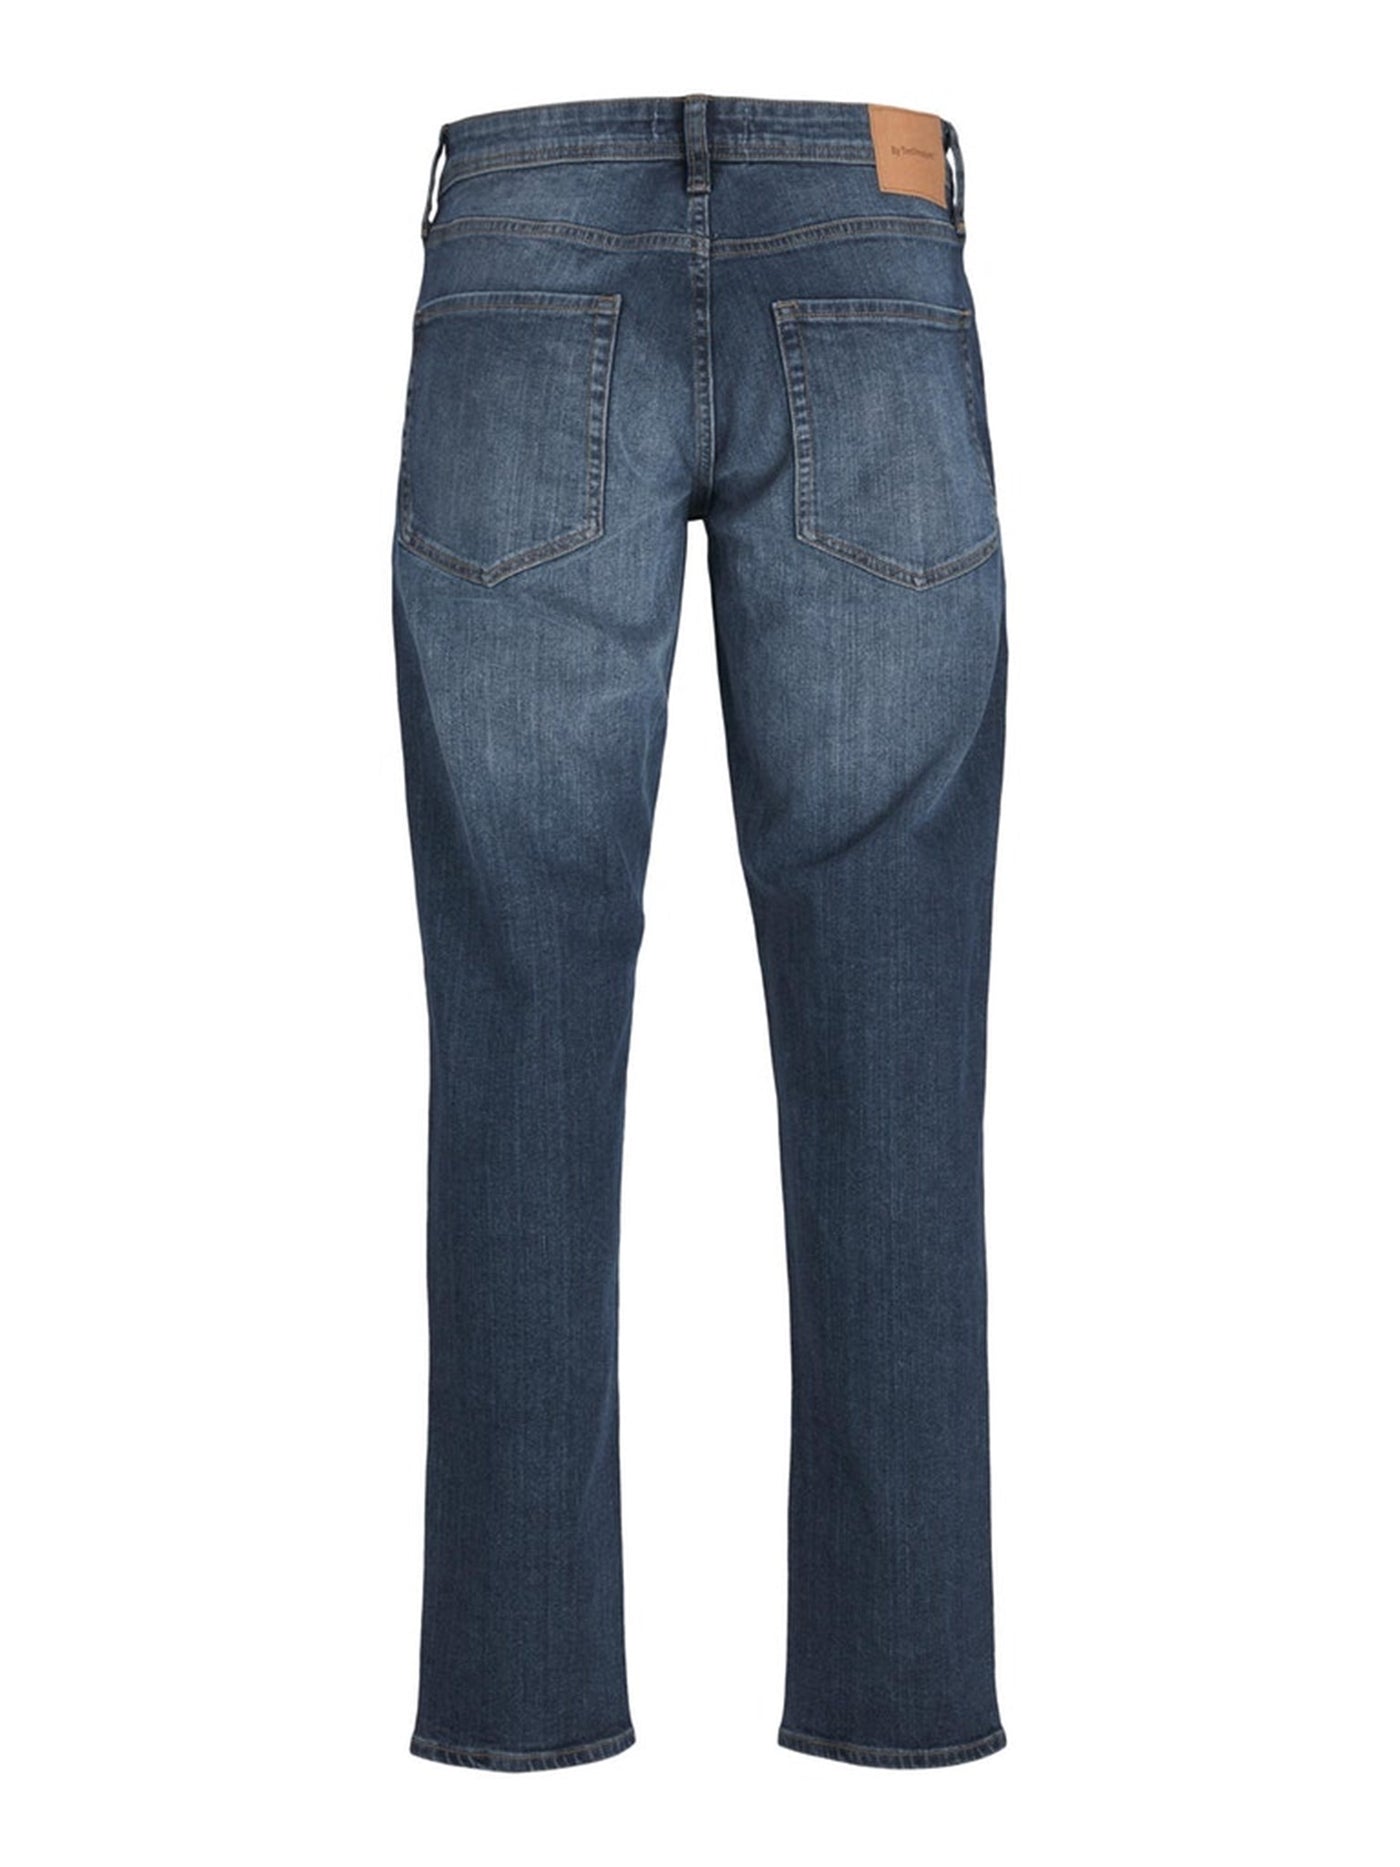 Performance Jeans (Regular) - Medium Blue Denim - TeeShoppen 11